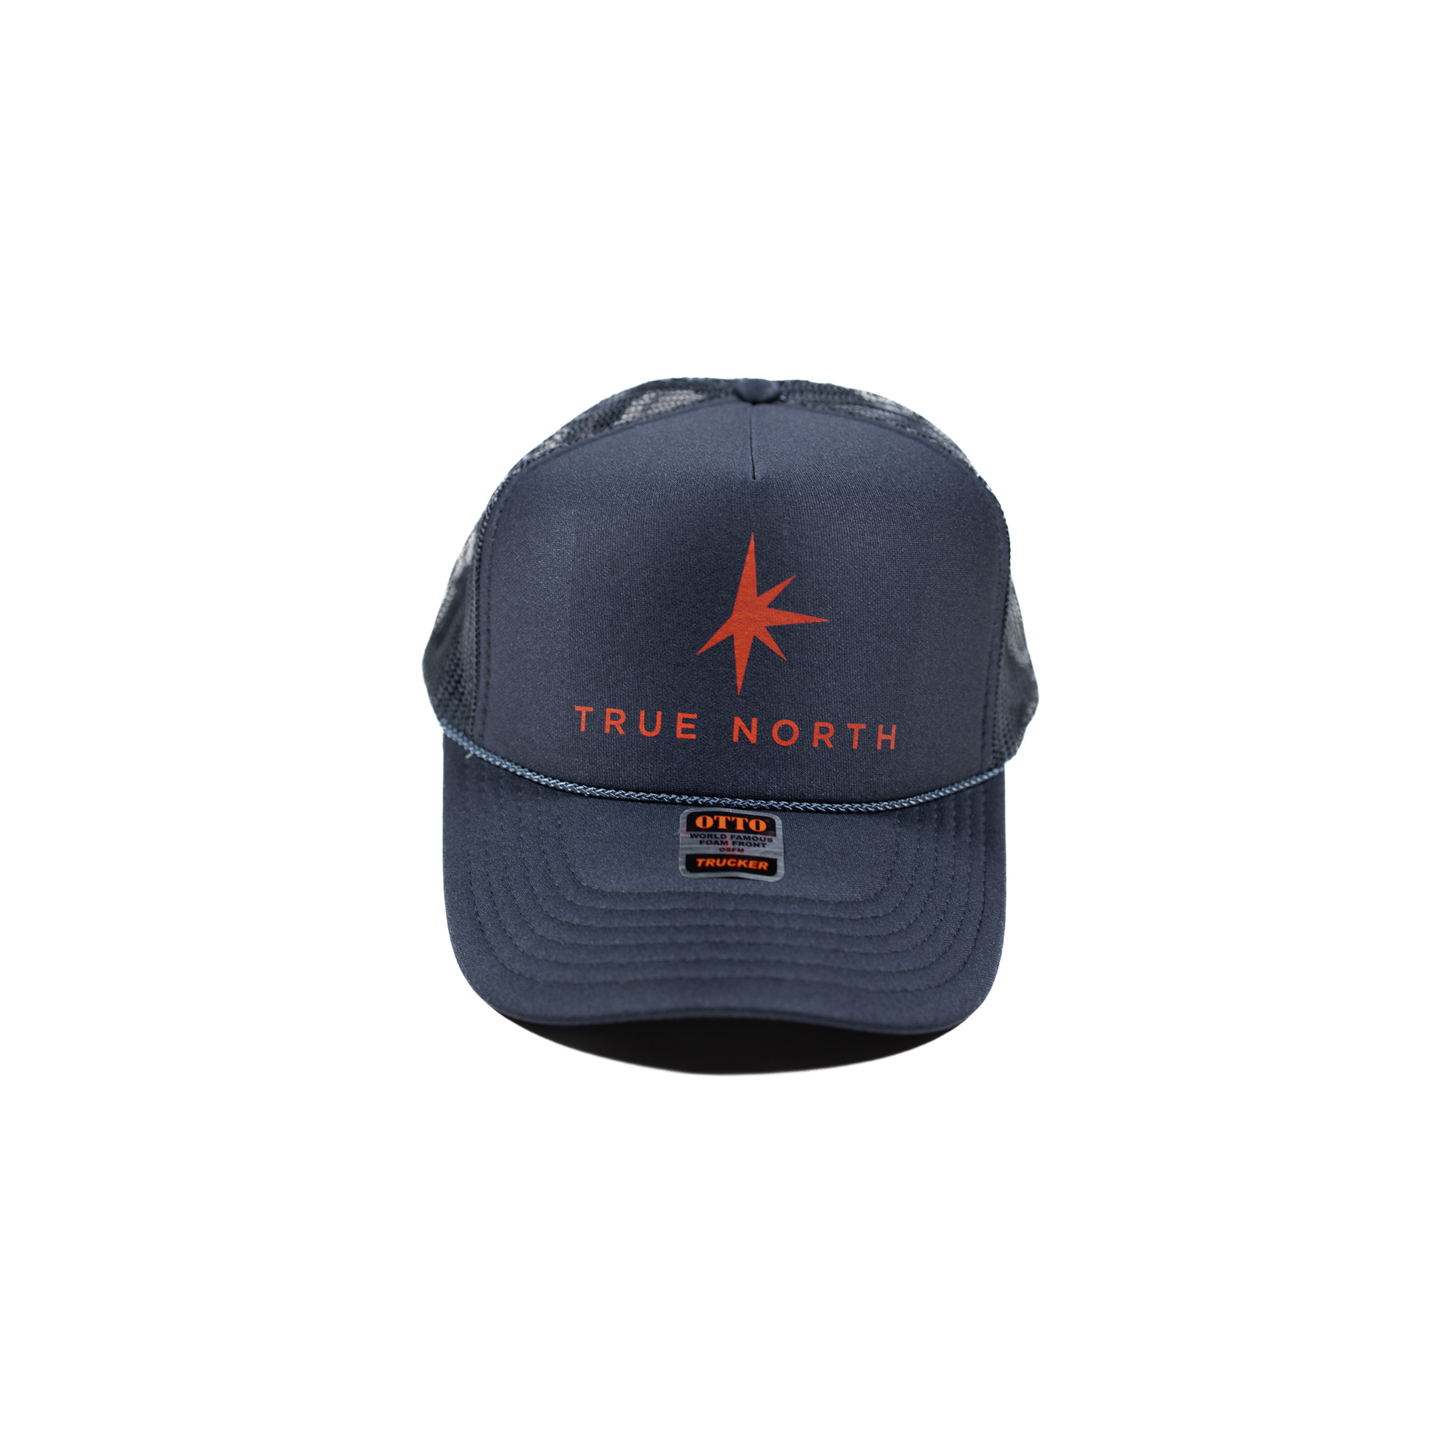 True North Navy Trucker Hat